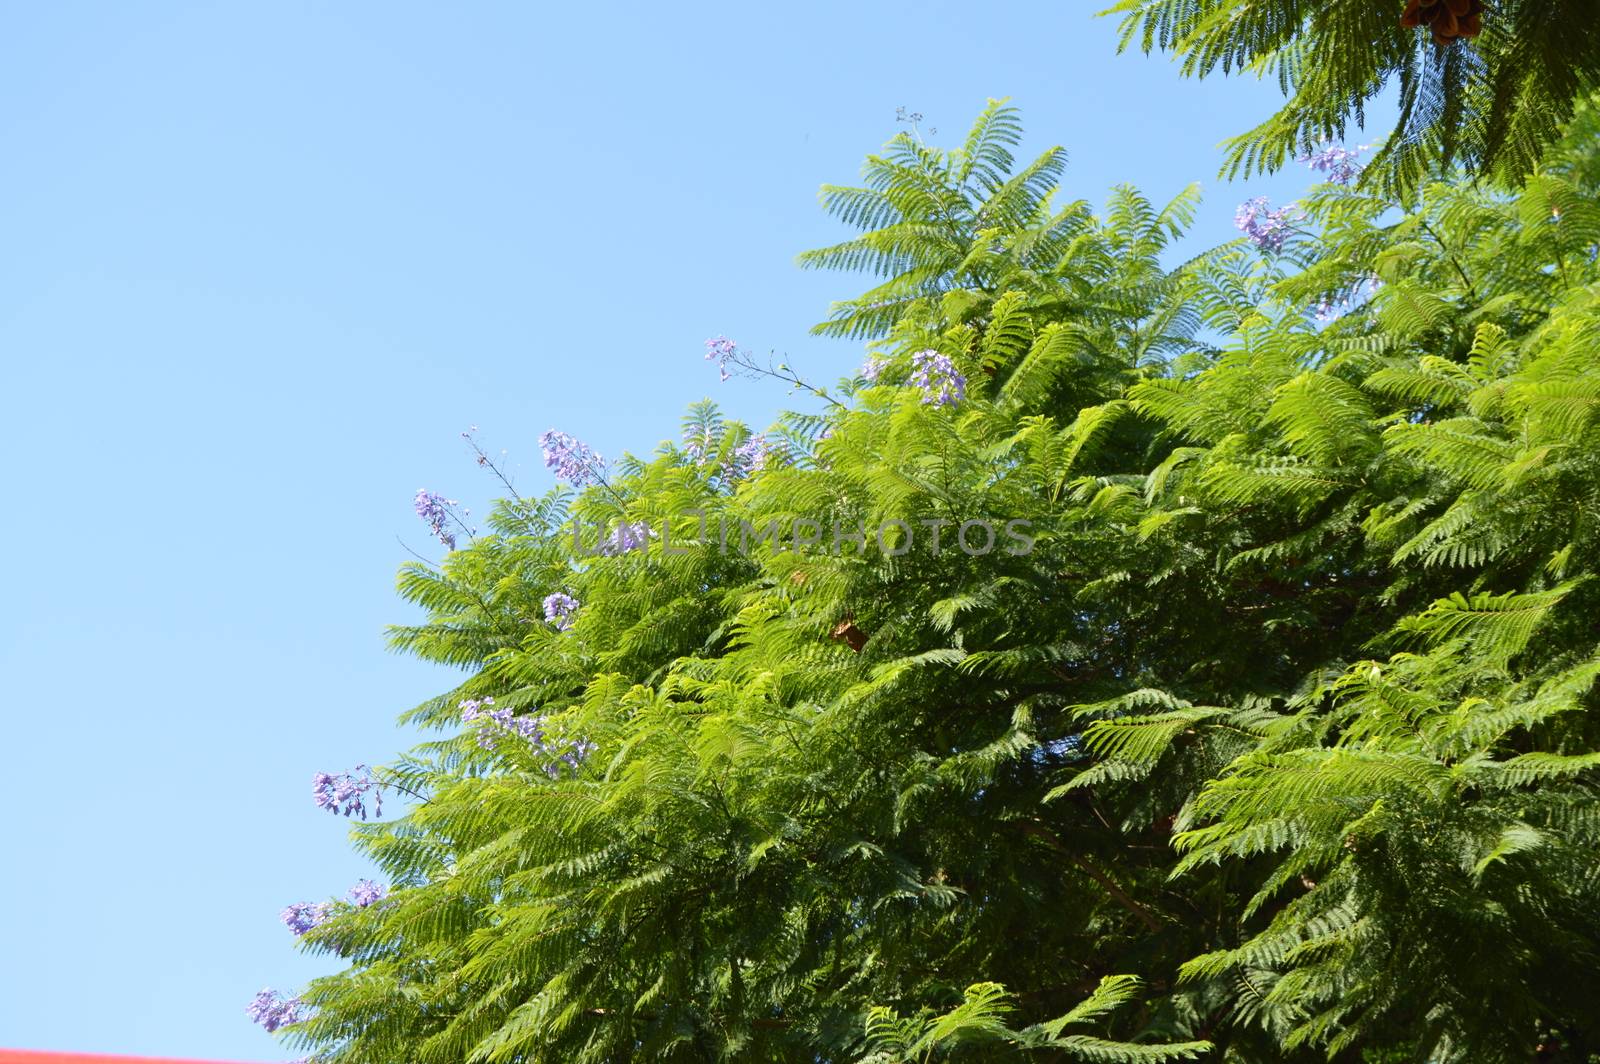 Close-up of Jacaranda fern tree branches with purple flowers on blue sky background, Jacaranda Mimosifolia.